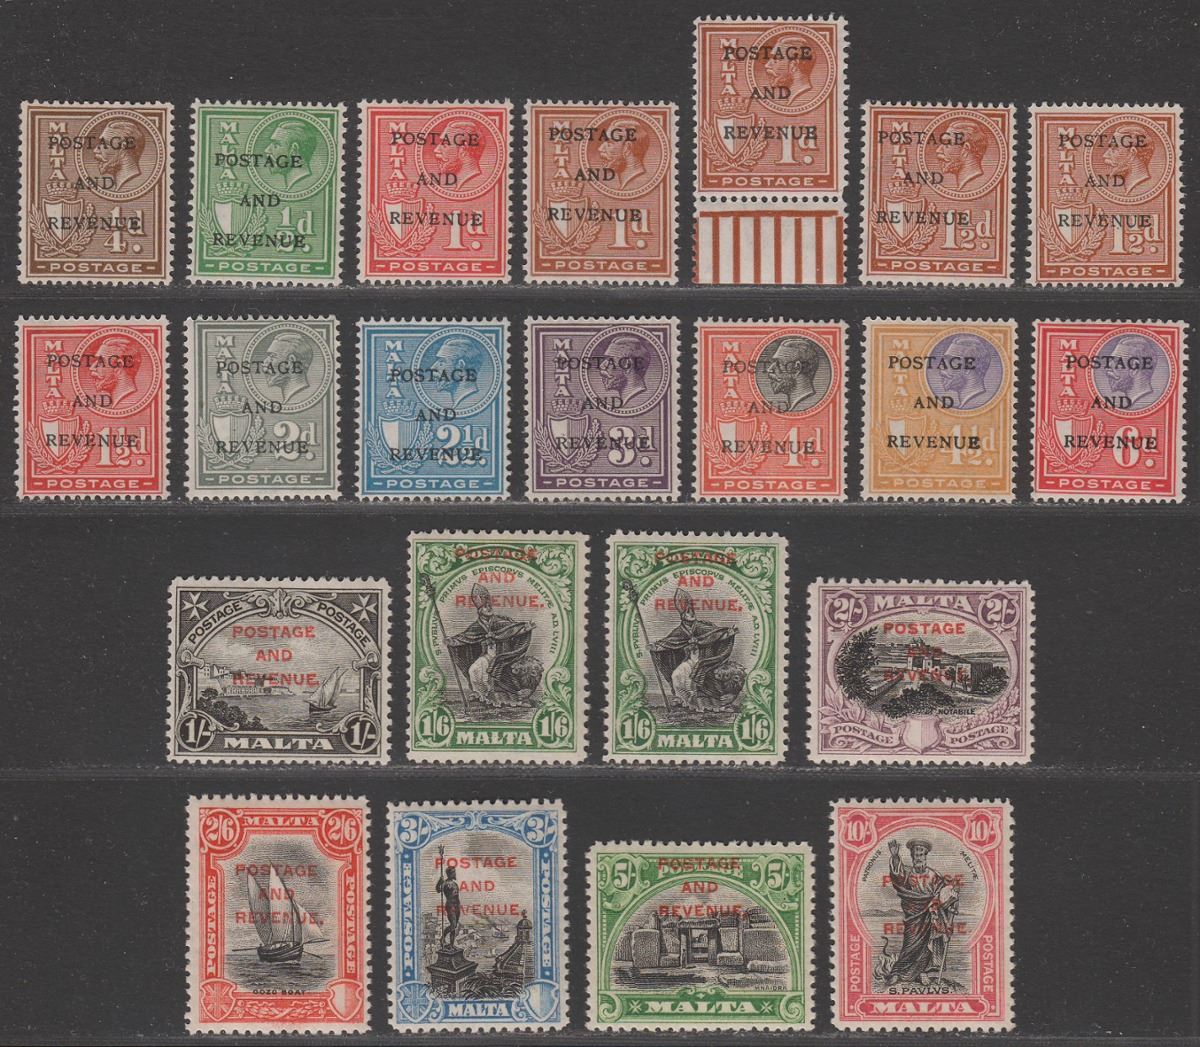 Malta 1928 KGV Postage and Revenue Overprint Set SG174-192 cat £200+